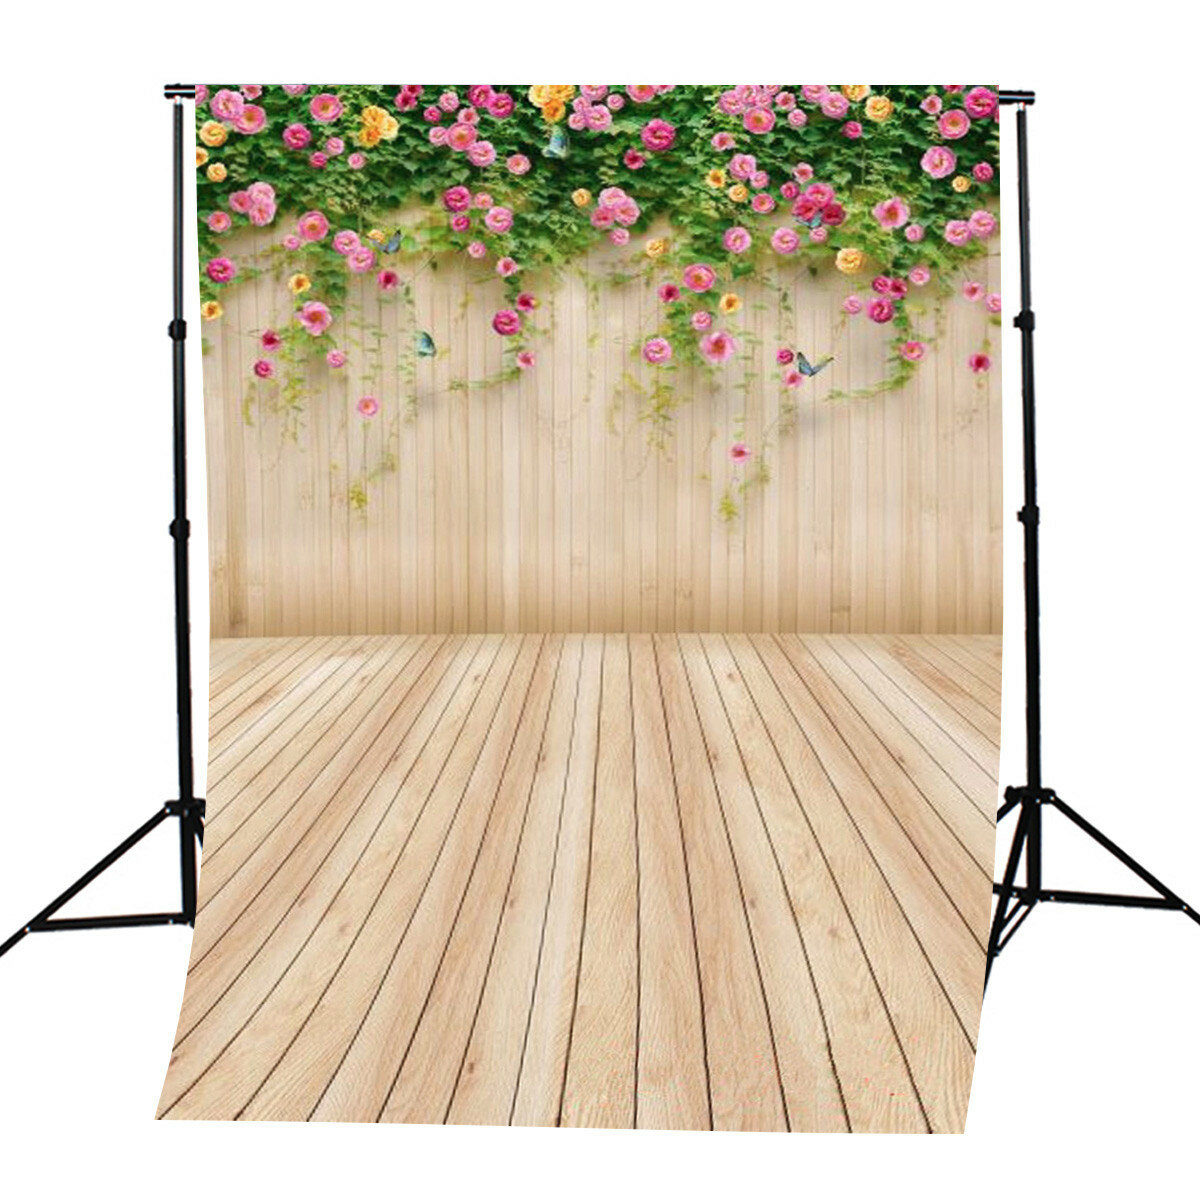 5x7ft Vinyl Flower Wood Floor Photography Background Backdrop For Studio Photo Prop Decoration